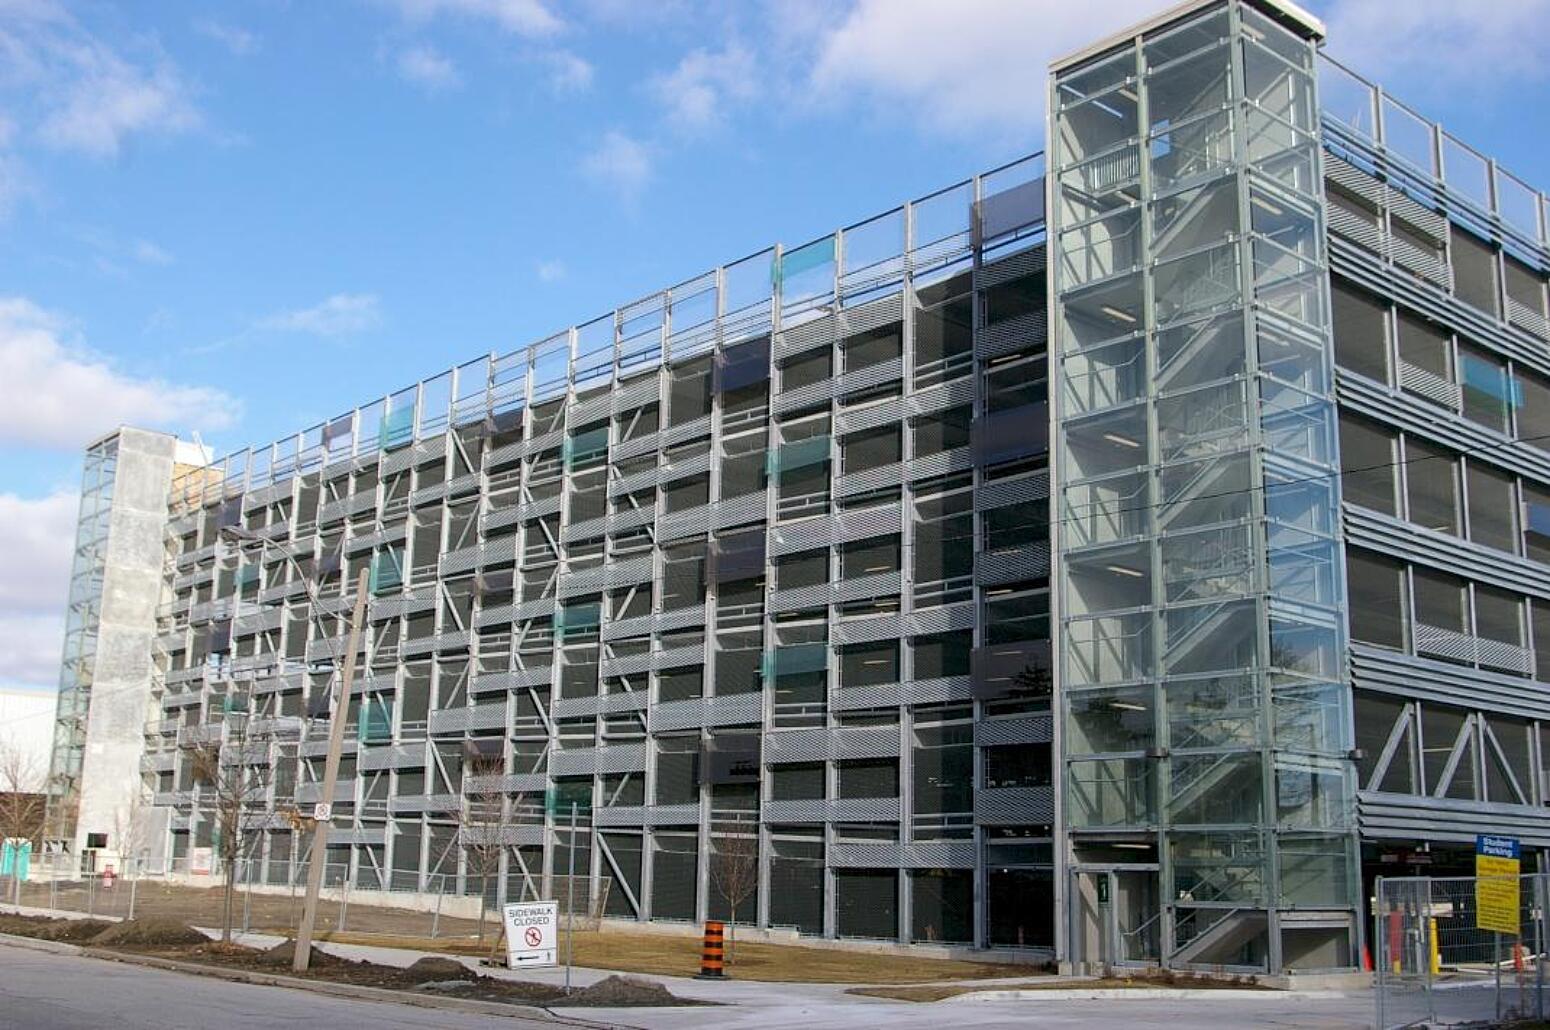 University of Windsor Parking Structure